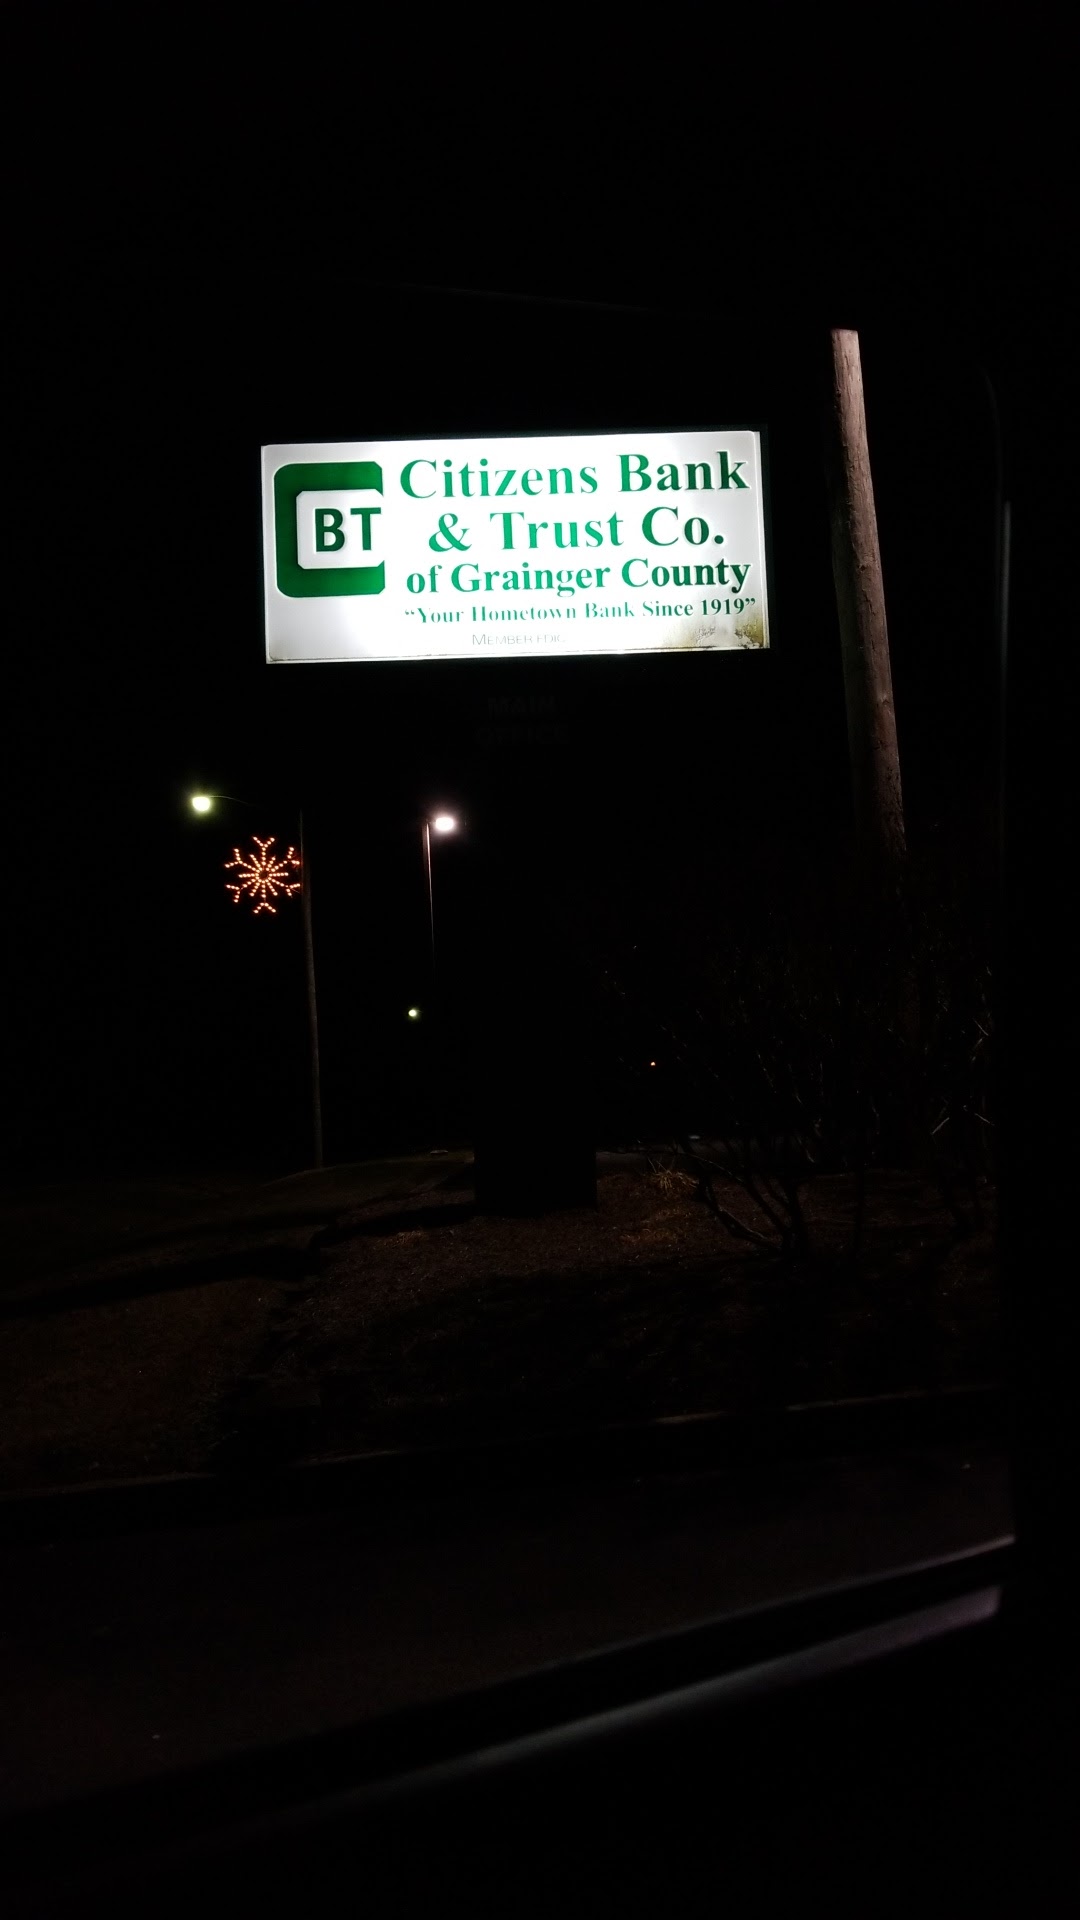 Citizens Bank & Trust Co. of Grainger County